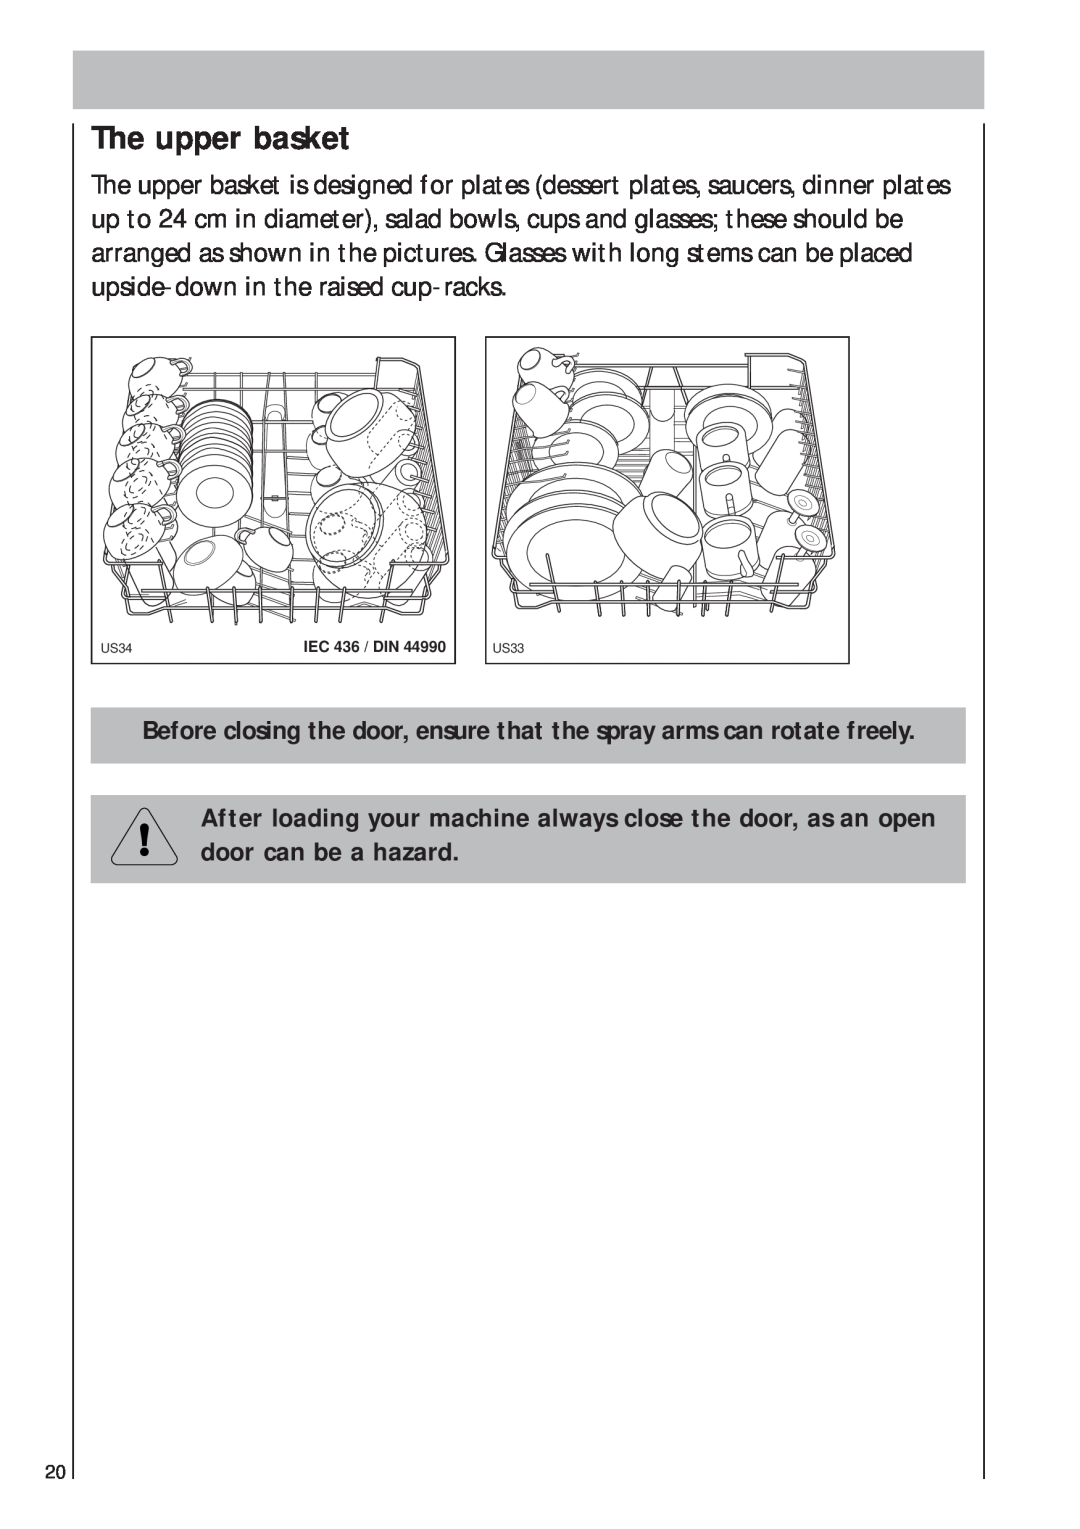 AEG 403 manual The upper basket, IEC 436 / DIN 